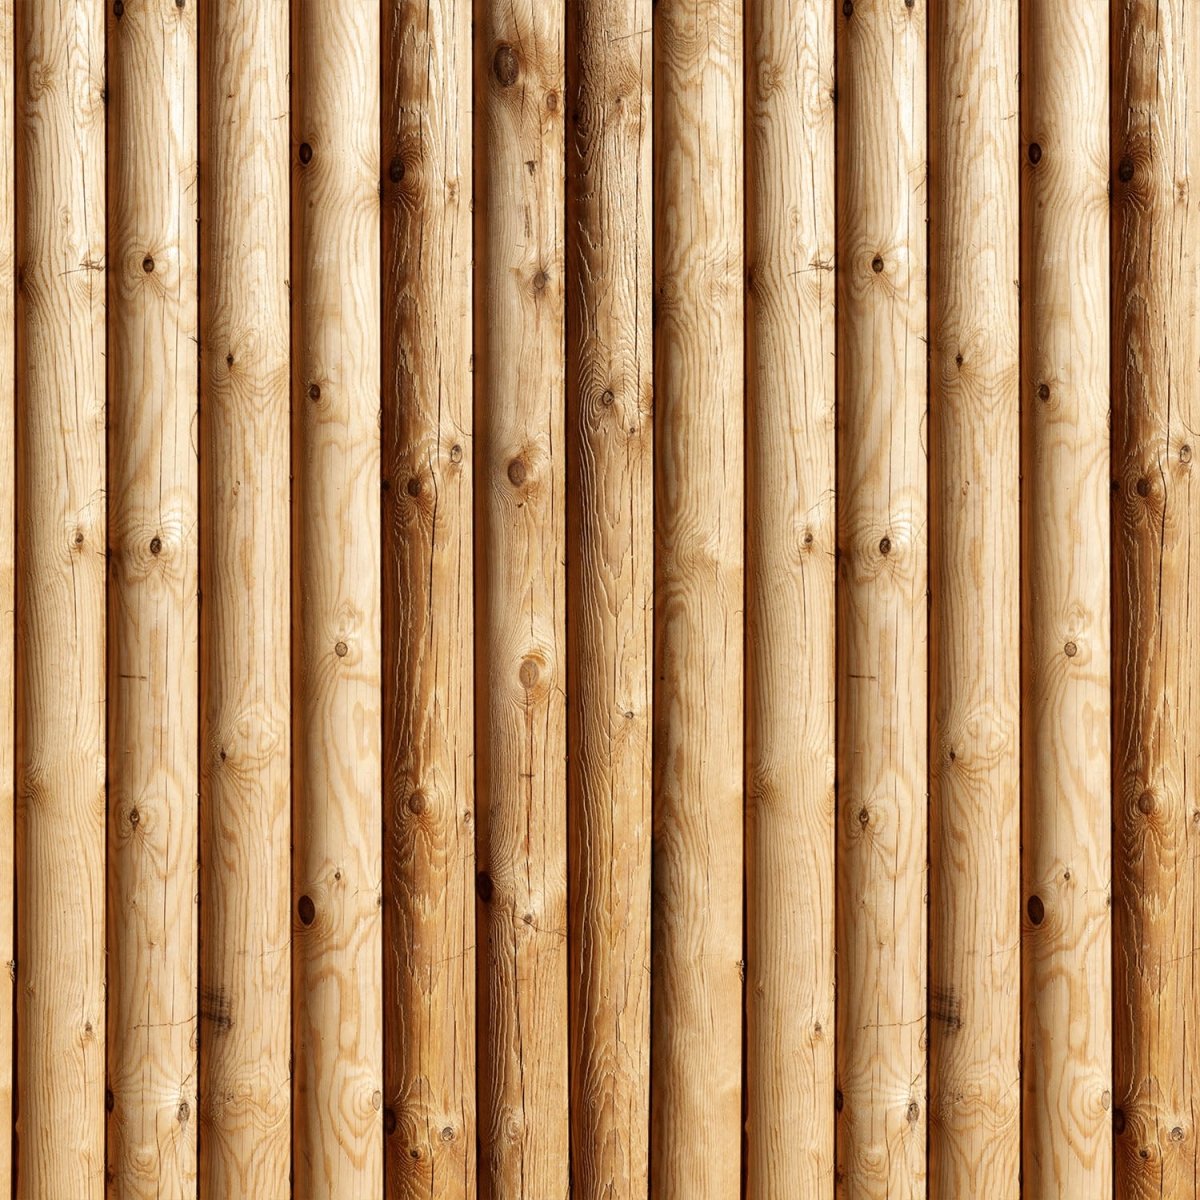 Beistelltisch Rustik Holzwand M0704 entdecken - Bild 2